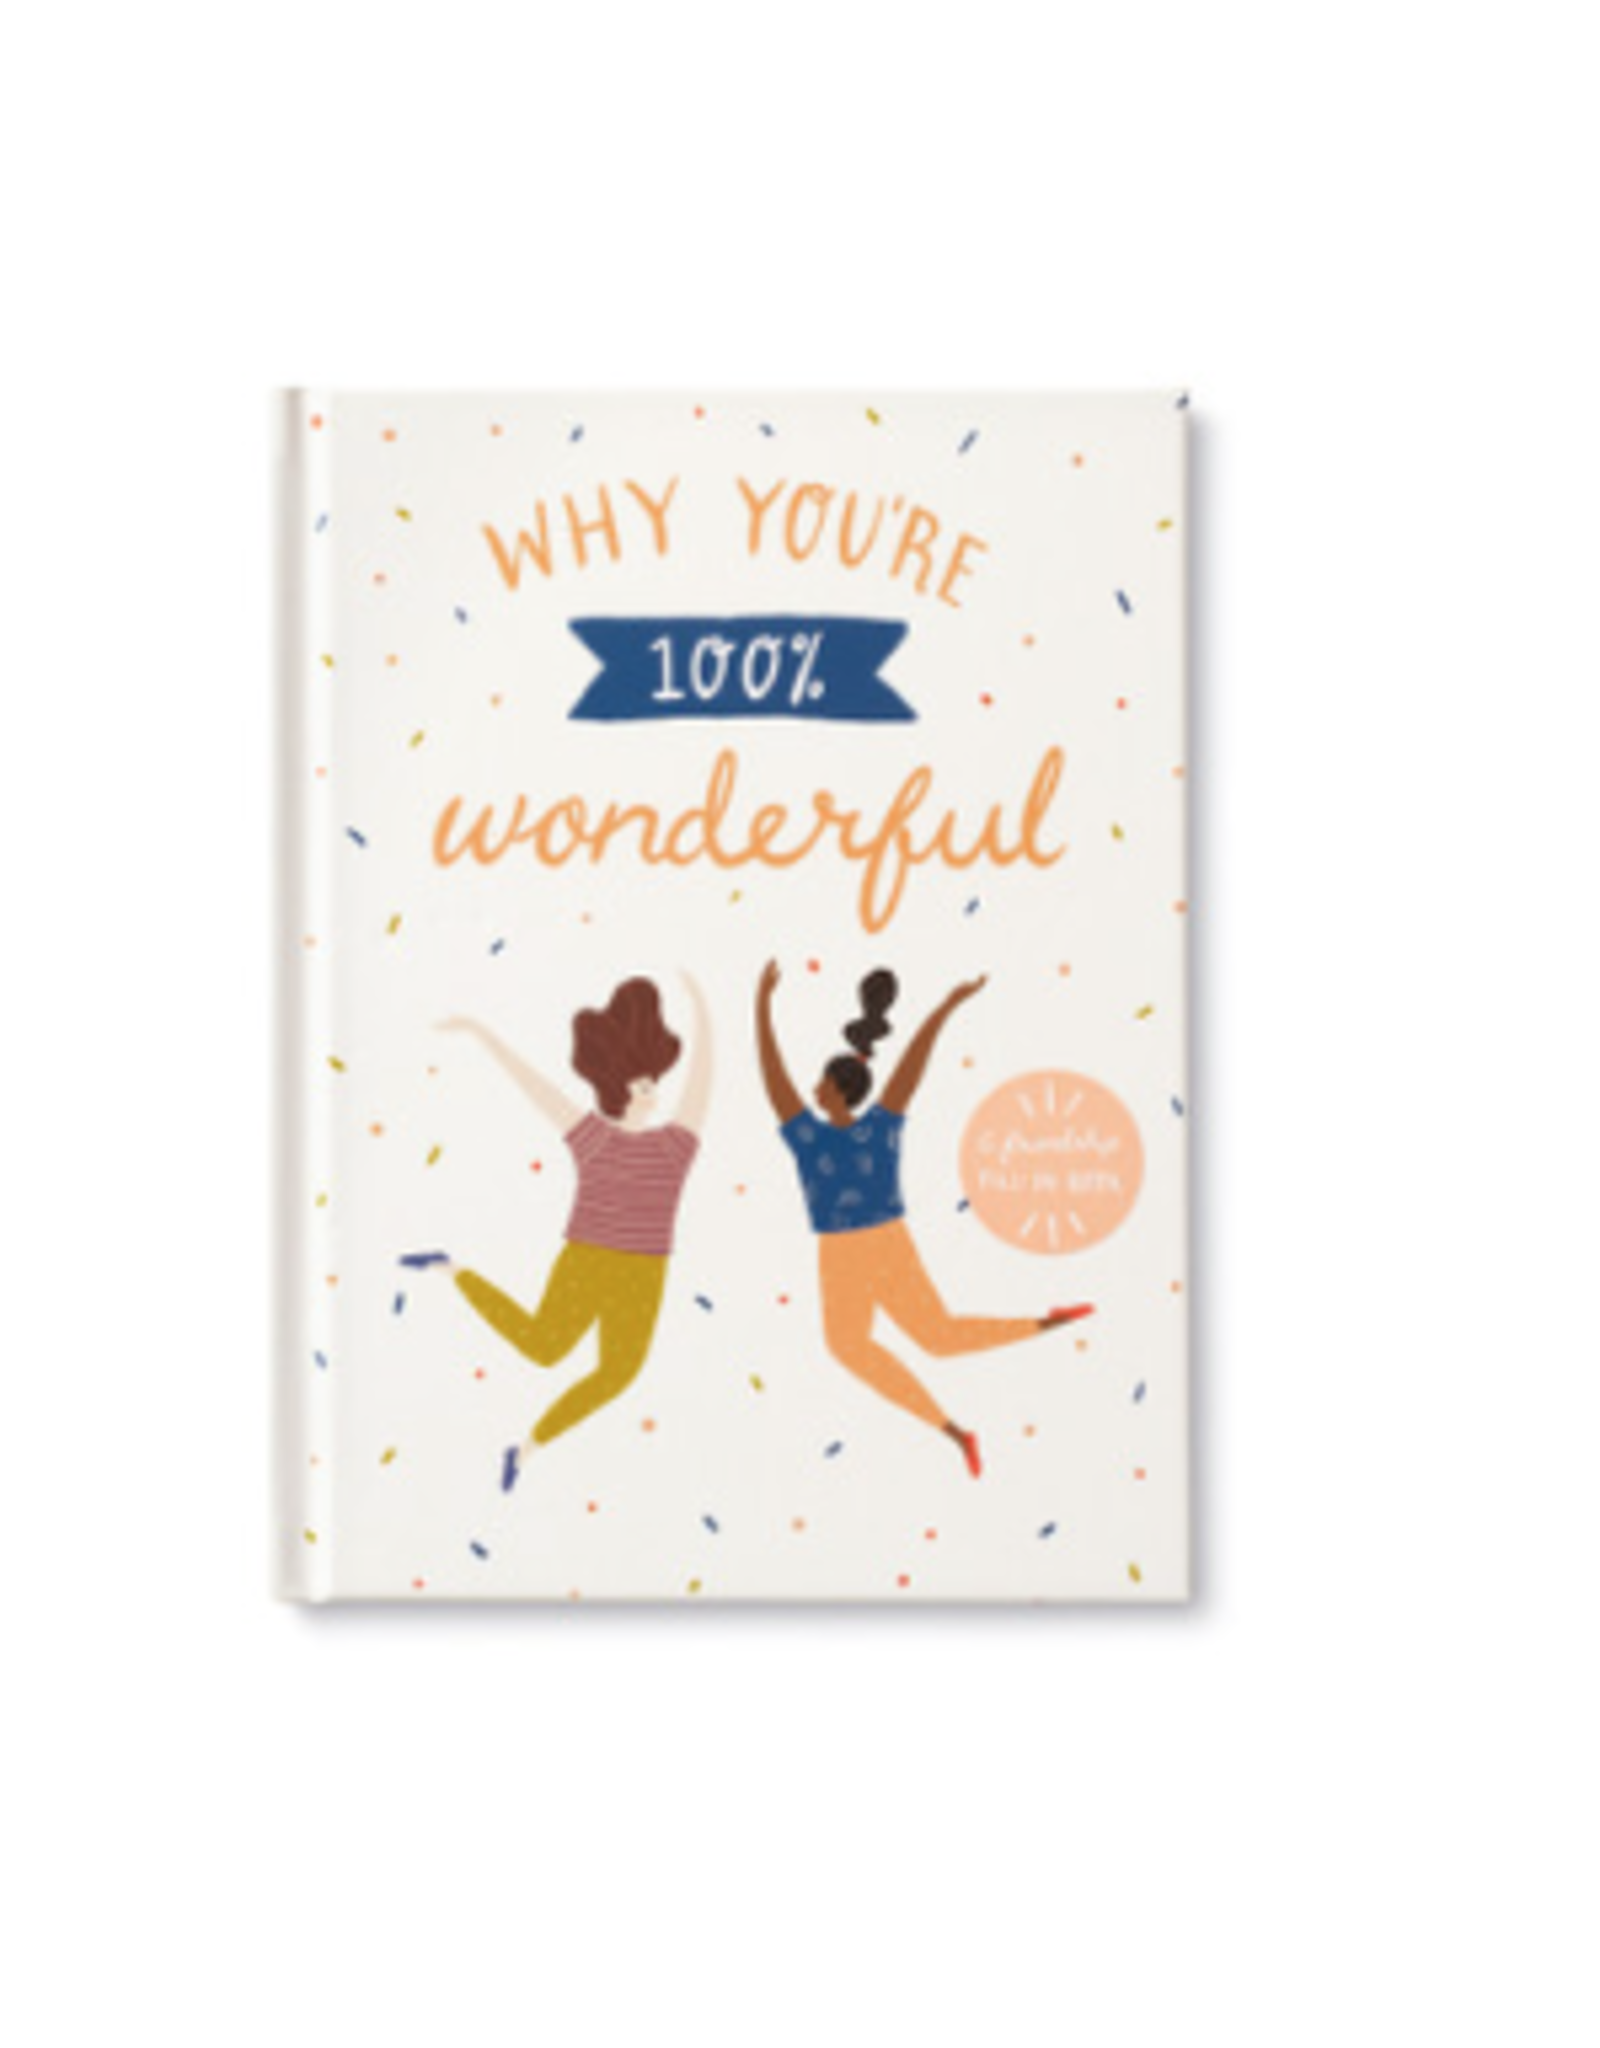 Compendium, Inc. Book, Why You're 100% Wonderful